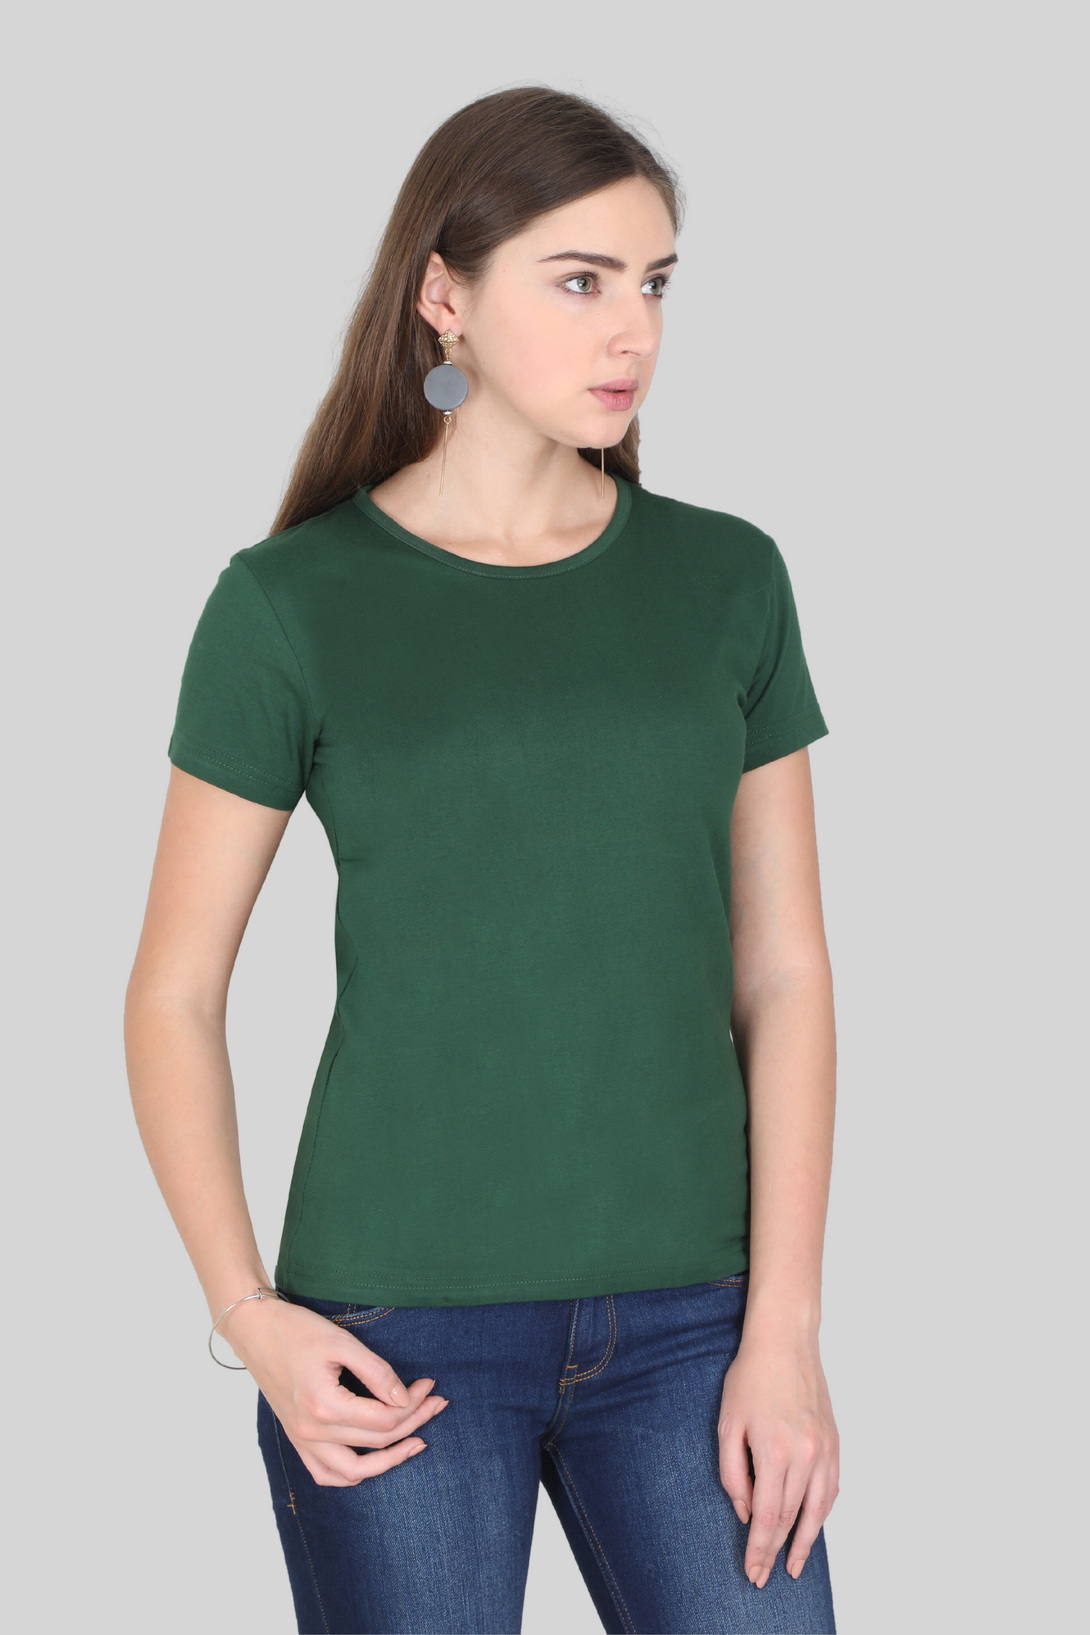 Bottle Green Scoop Neck T-Shirt For Women - WowWaves - 3